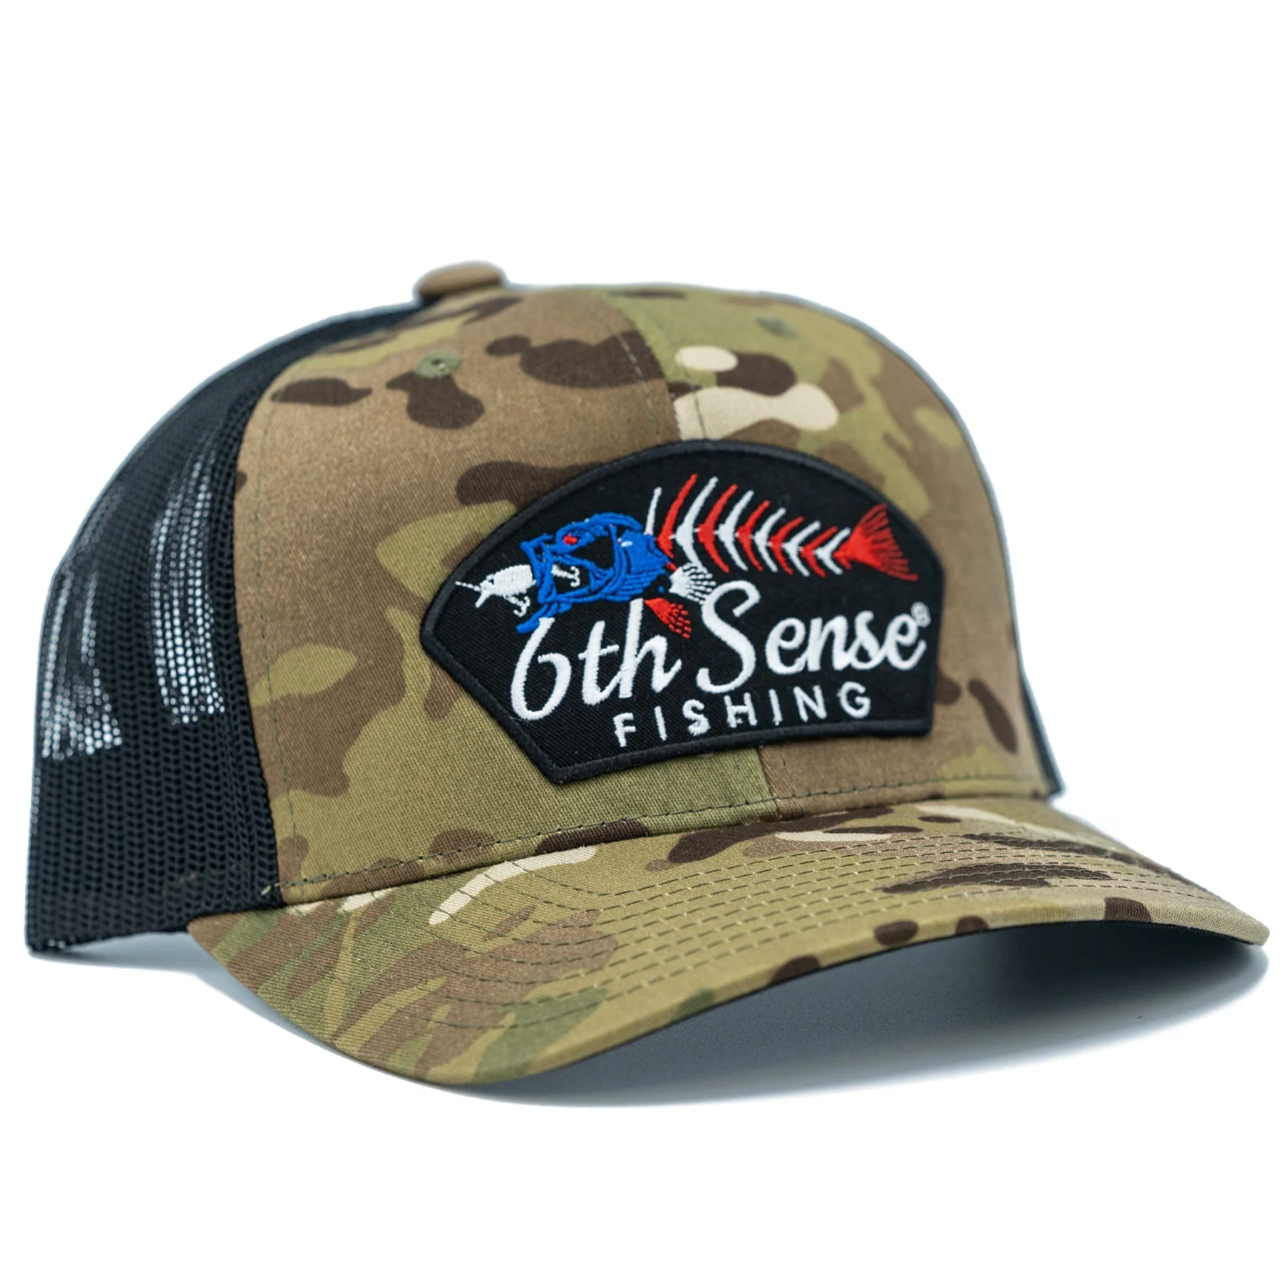 6th Sense Fishbones Snapback Hat